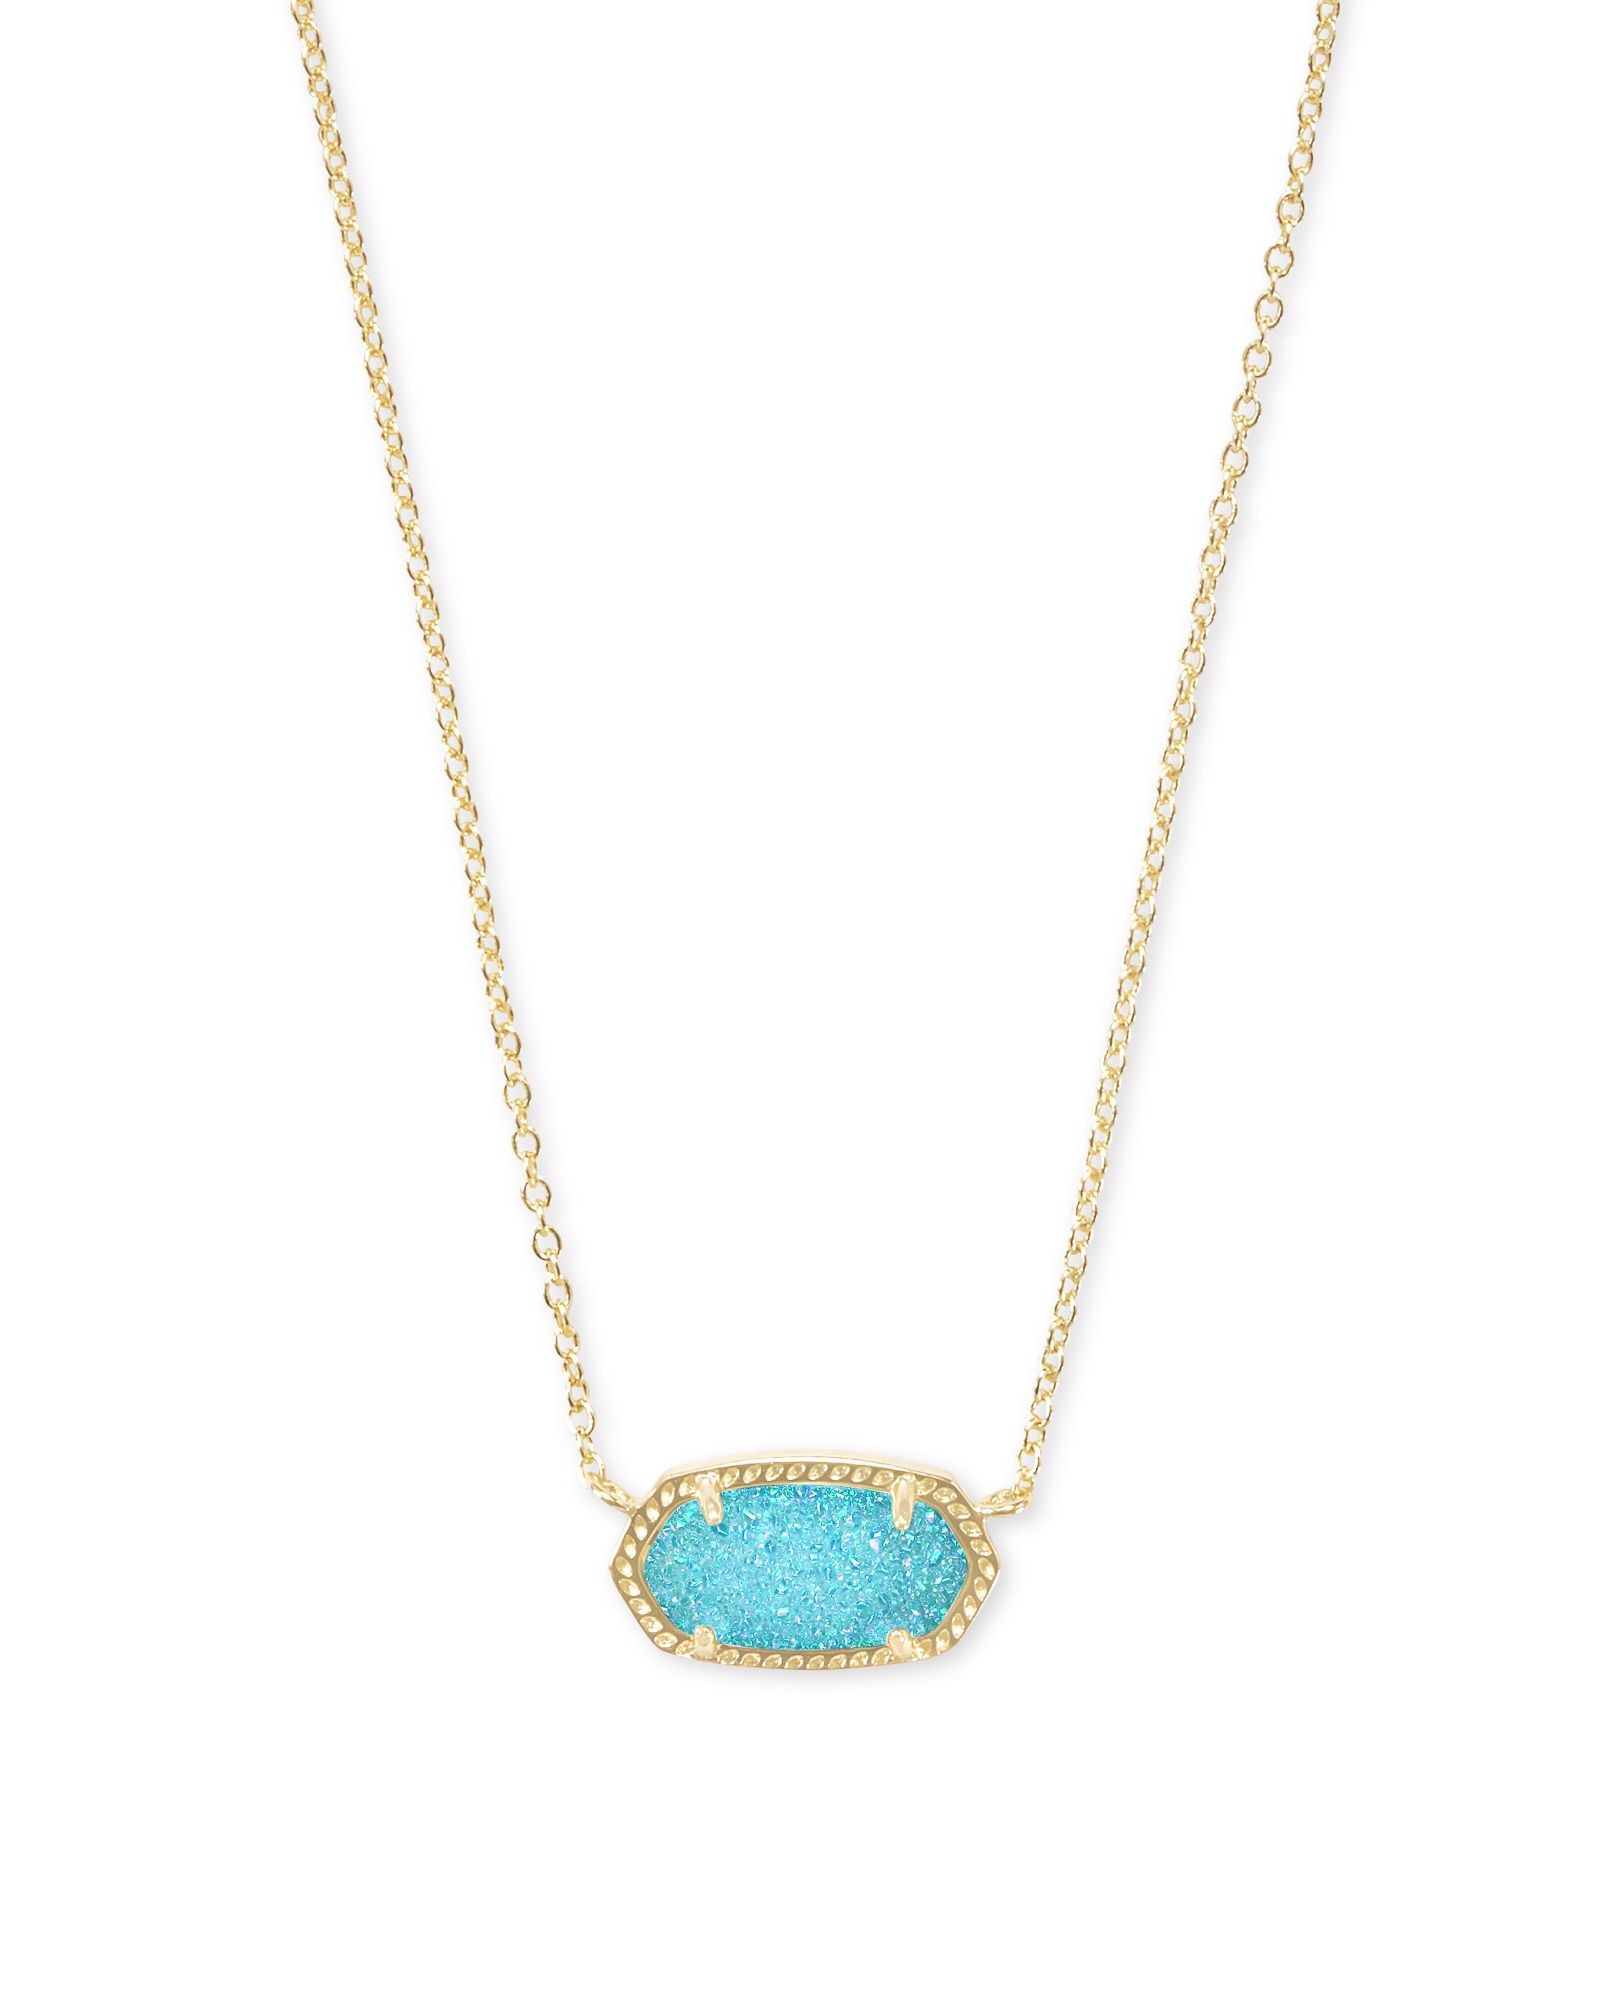 Elisa Gold Pendant Necklace in Bright Aqua Drusy | Kendra Scott